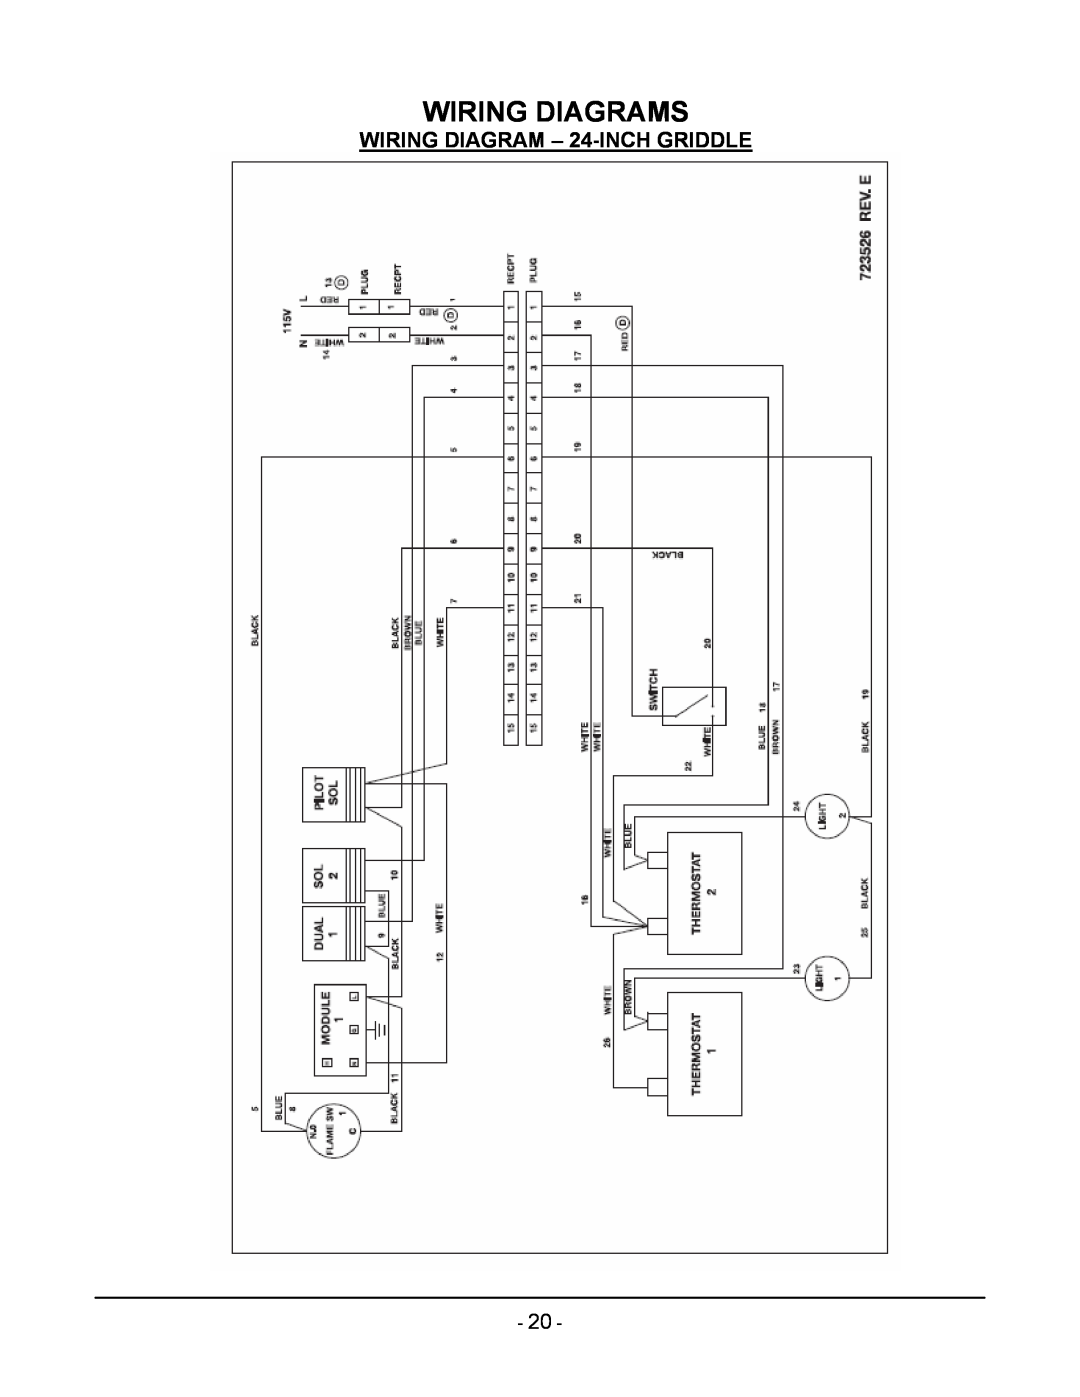 Vulcan-Hart ML-136221-00G24 manual WIRING DIAGRAM - 24-INCH GRIDDLE, Wiring Diagrams 